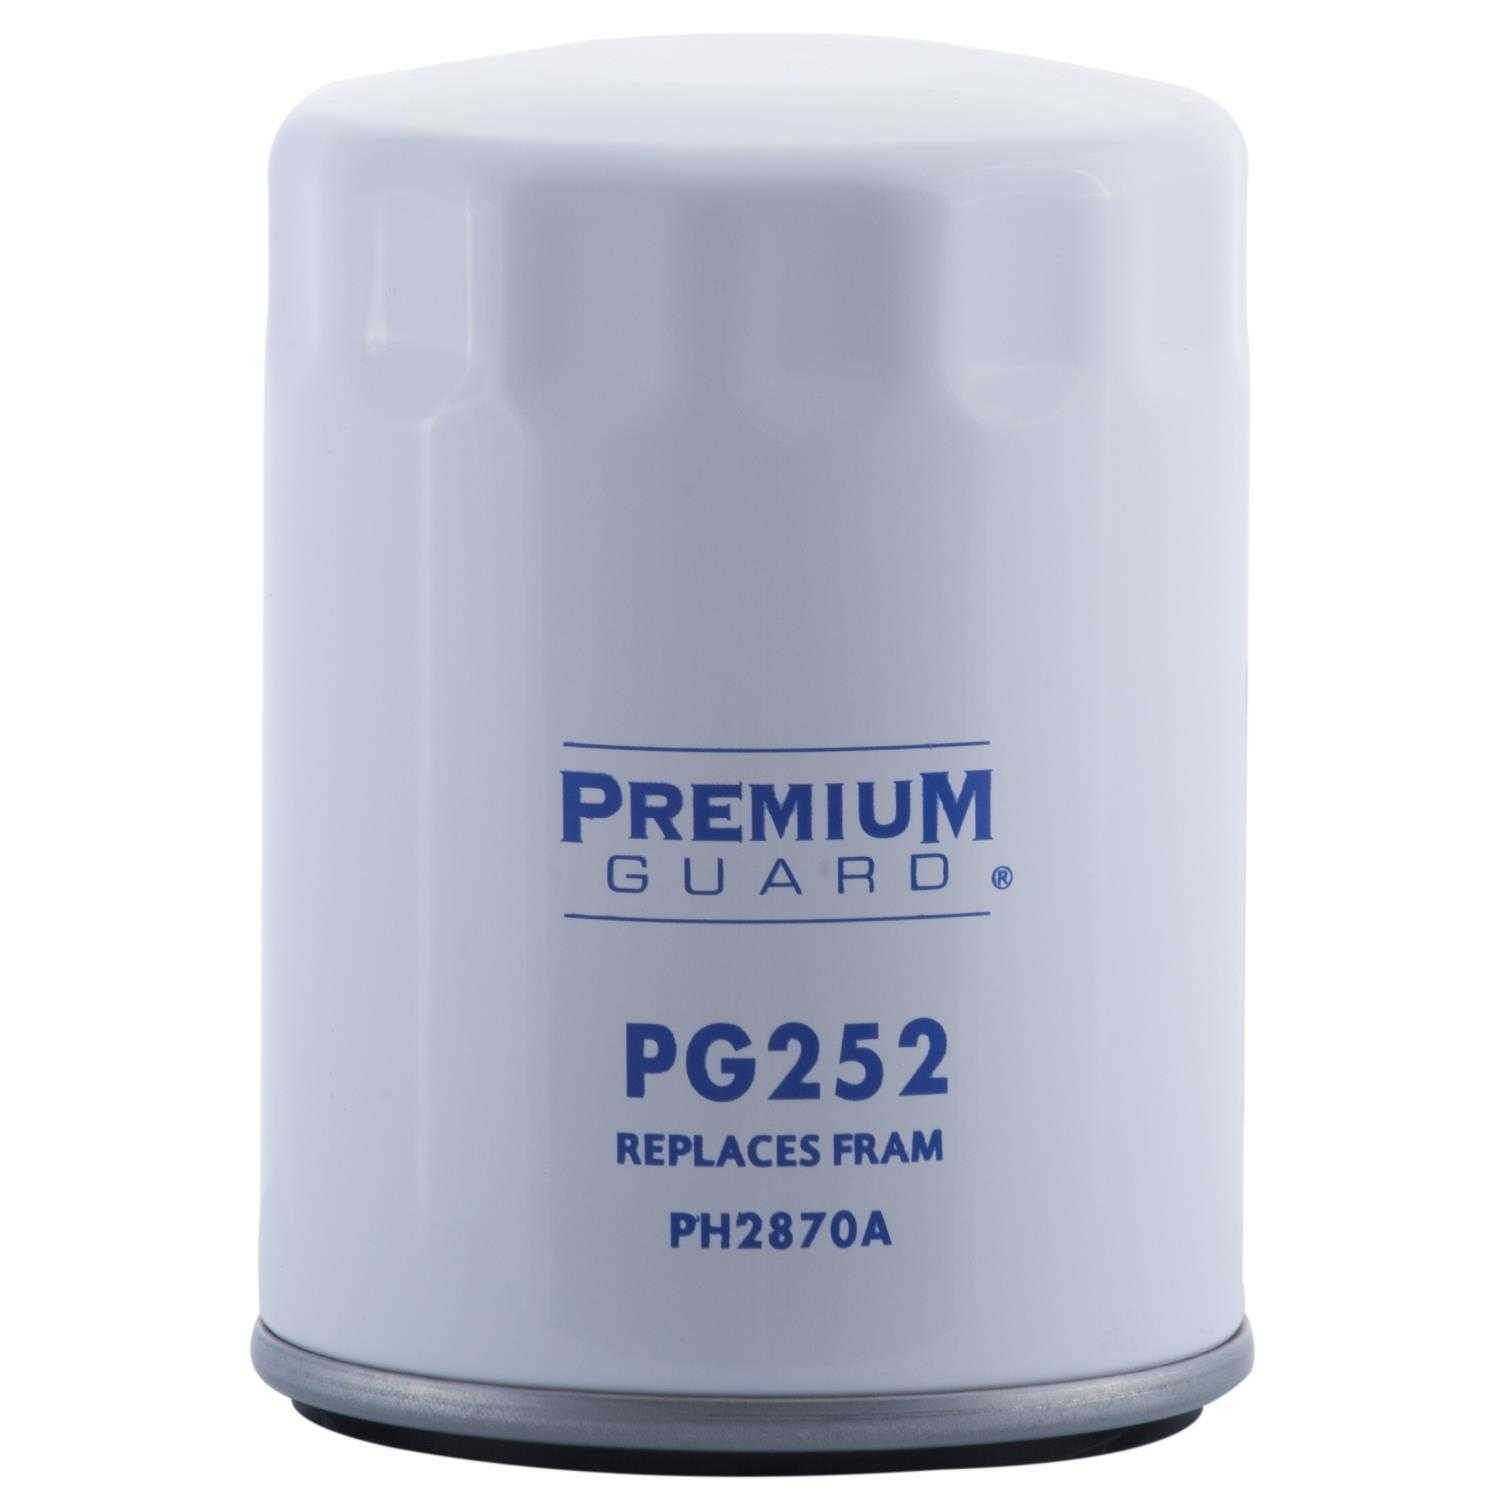 PREMIUM GUARD - Standard Life Oil Filter - PRG PG252